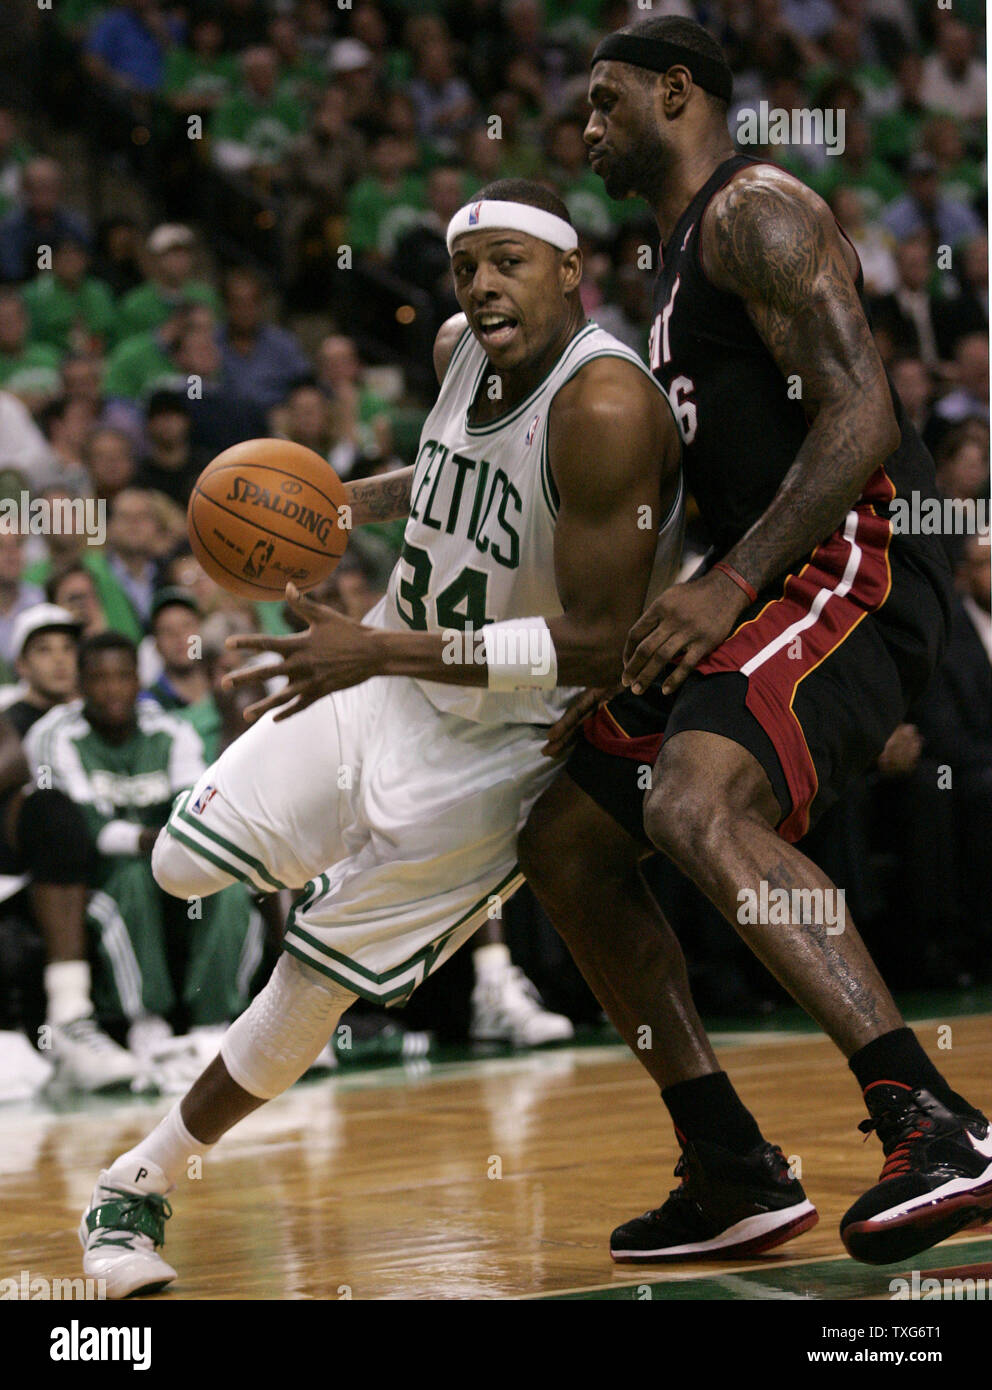 Boston Celtics forward Paul Pierce pushes his mouth guard back